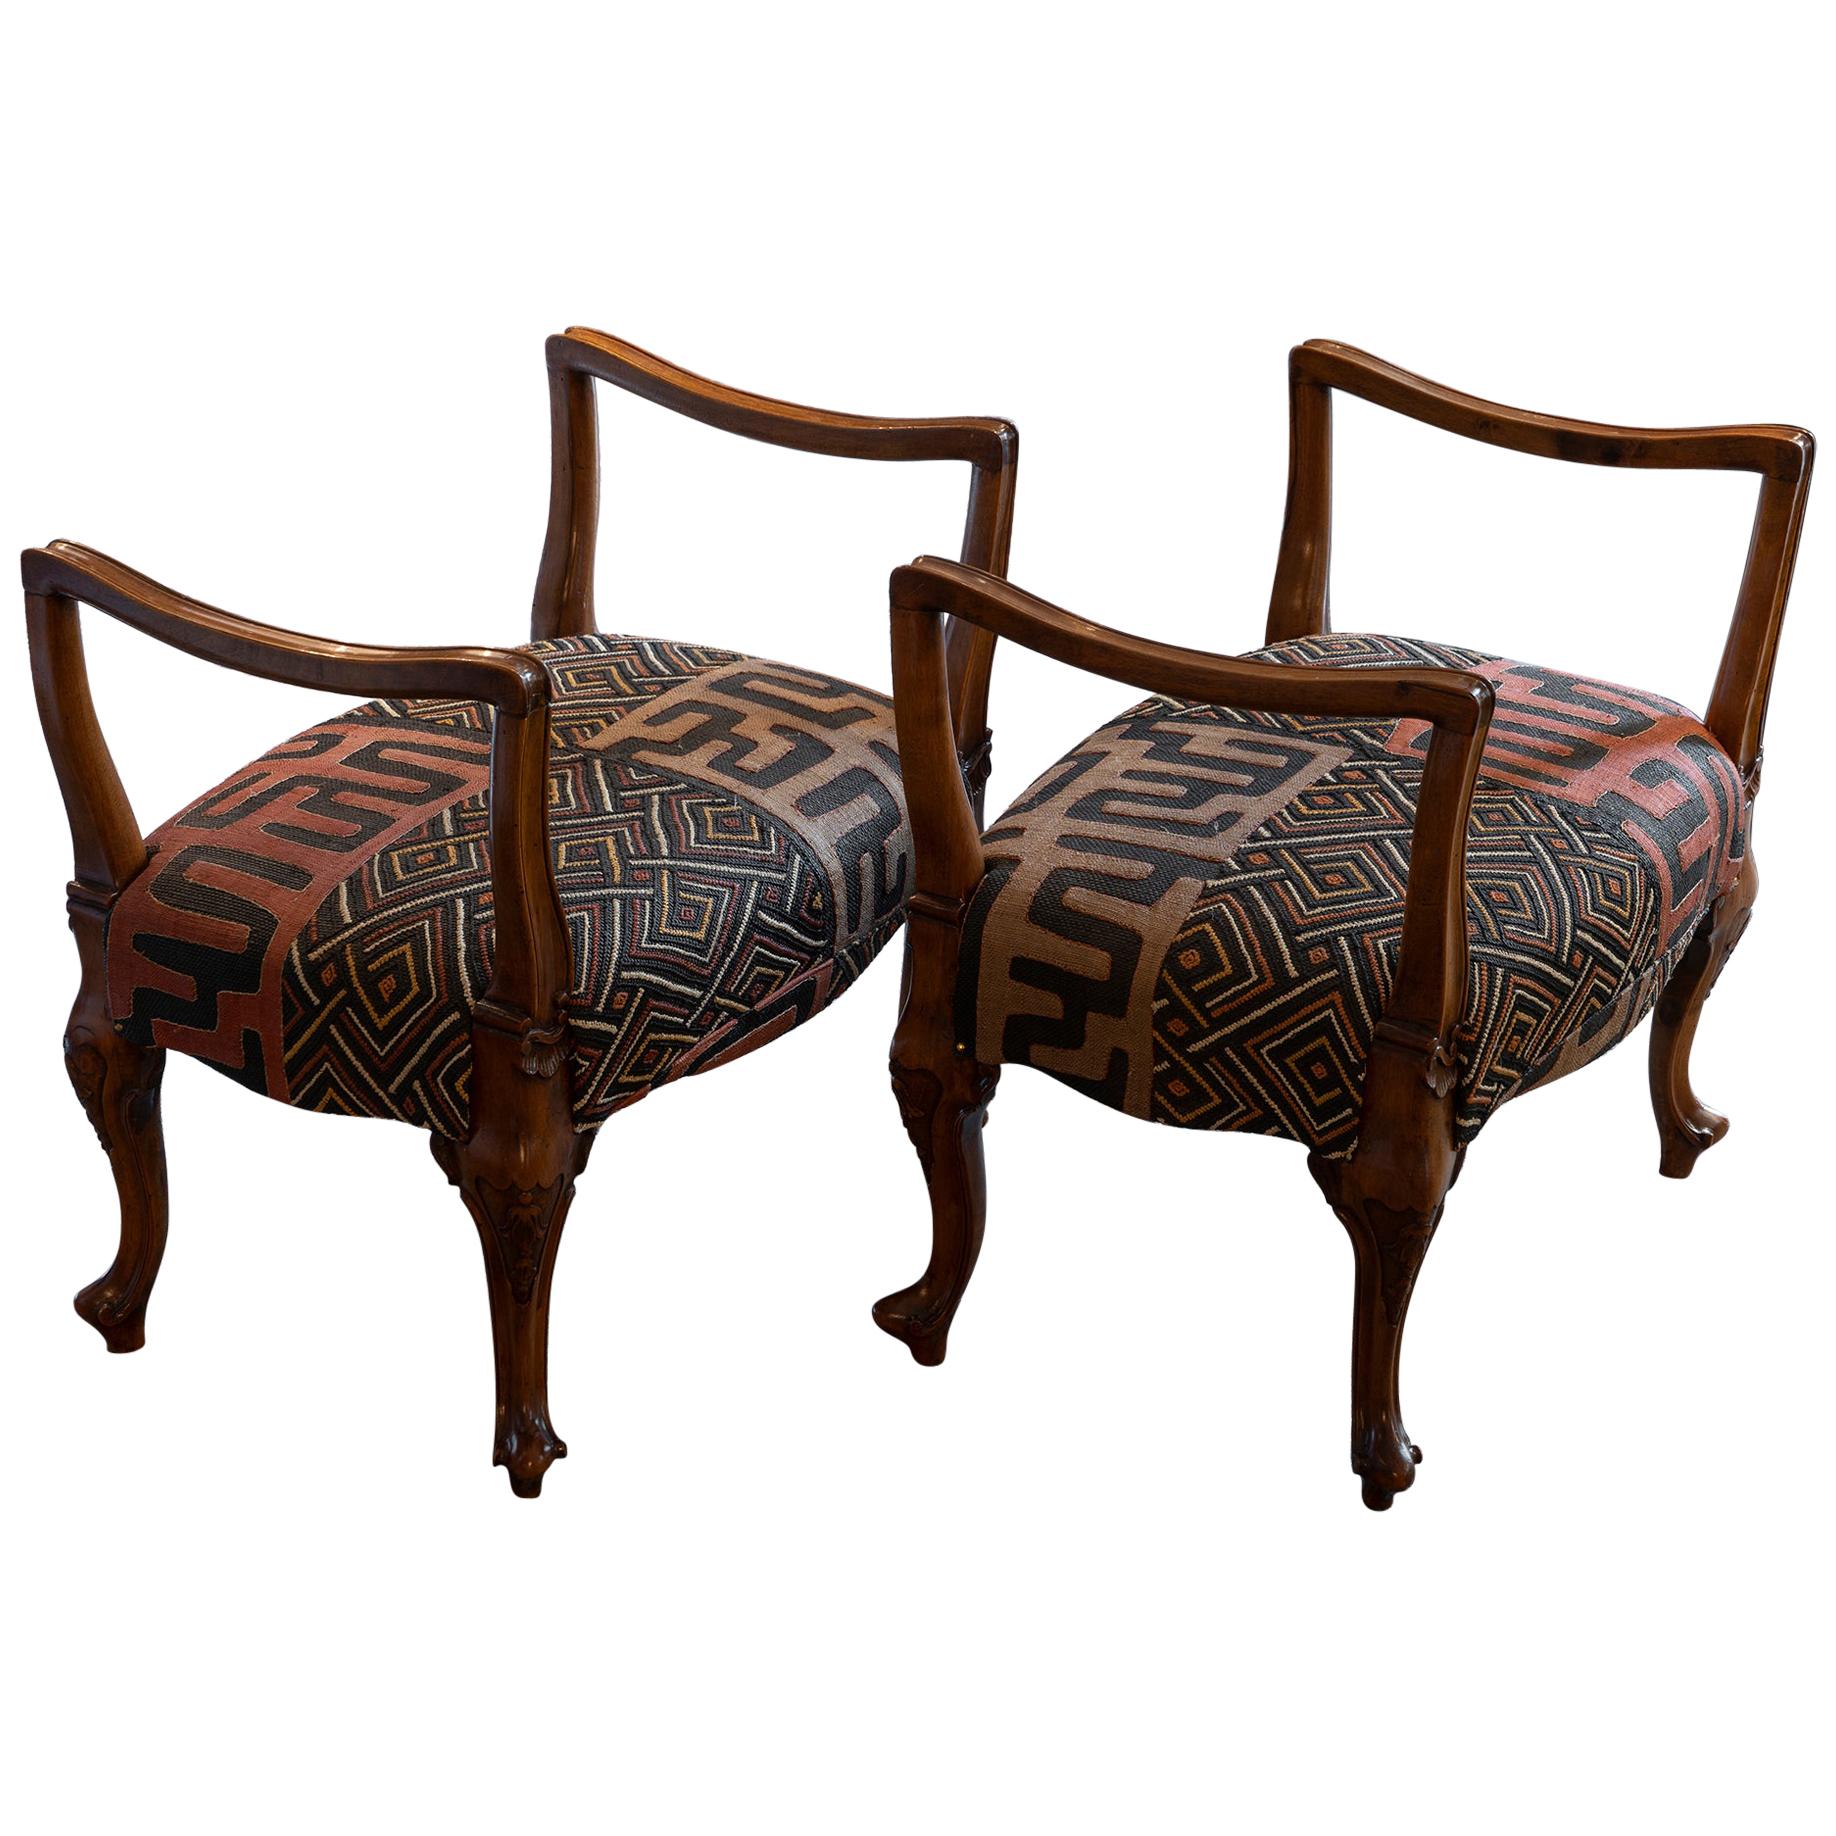 Late 19th Century Italian Walnut Stools African Woven Upholstery